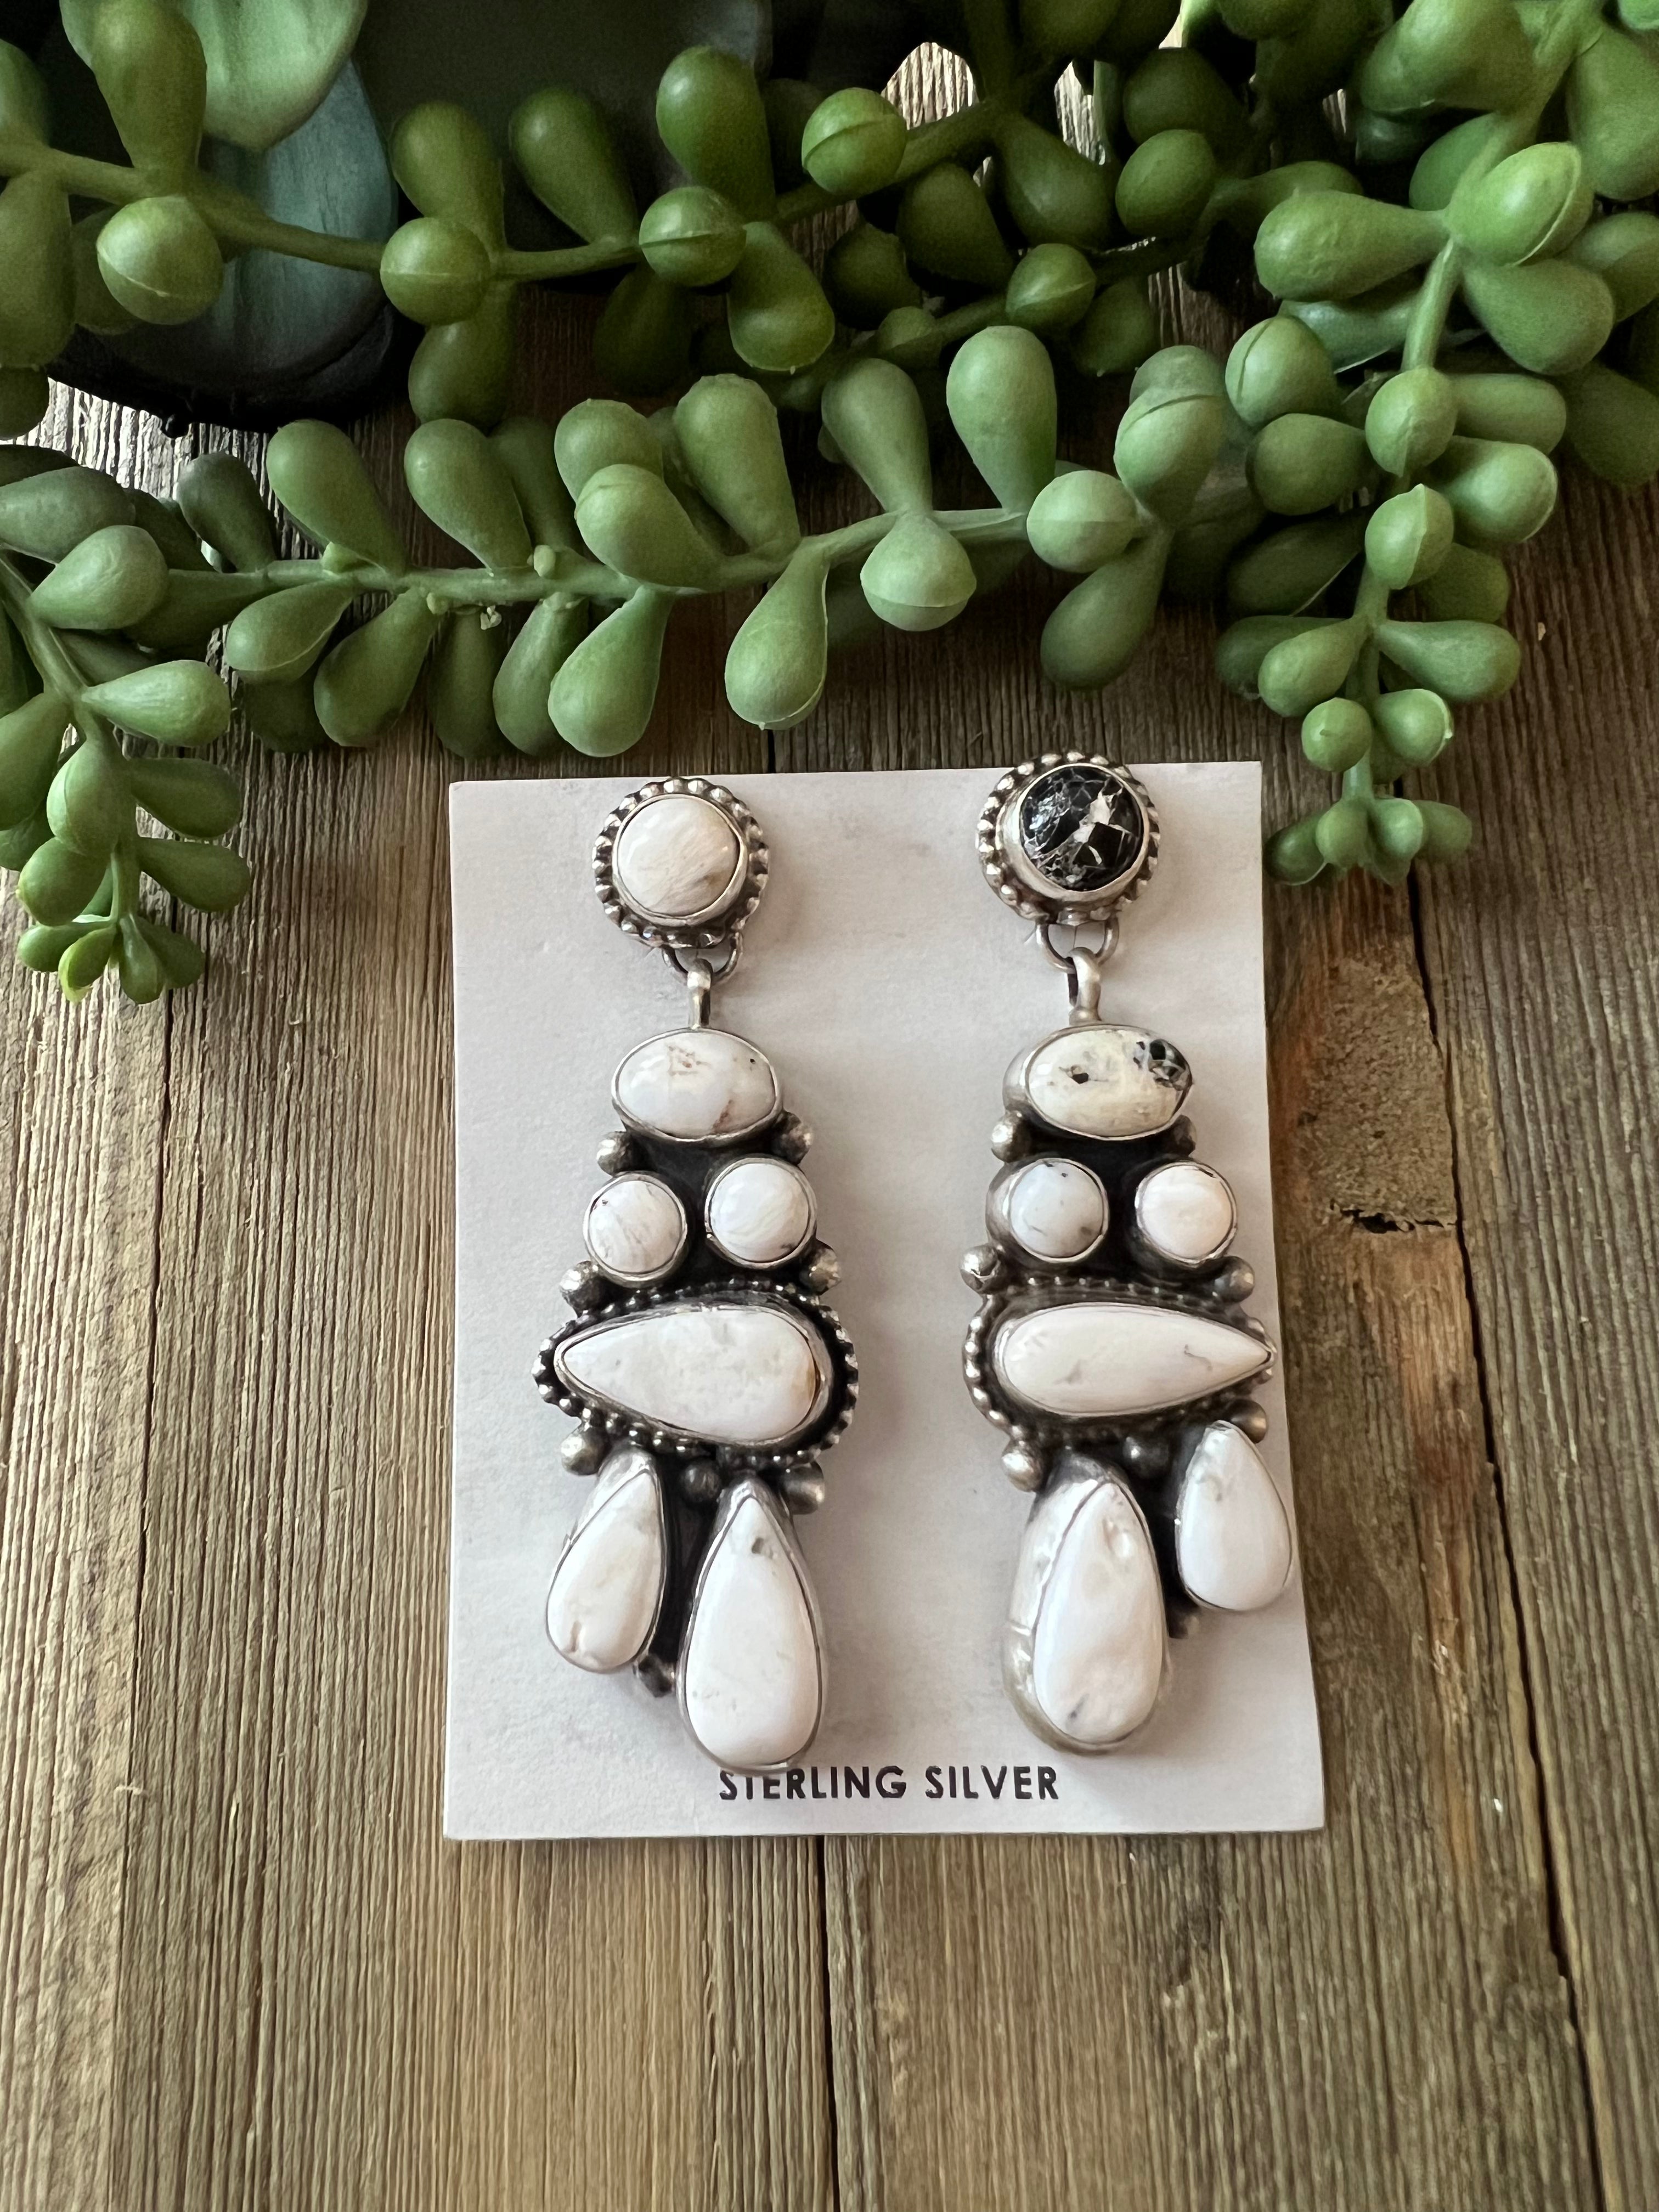 Shelia Becenti White Buffalo & Sterling Silver Post Dangle Earrings